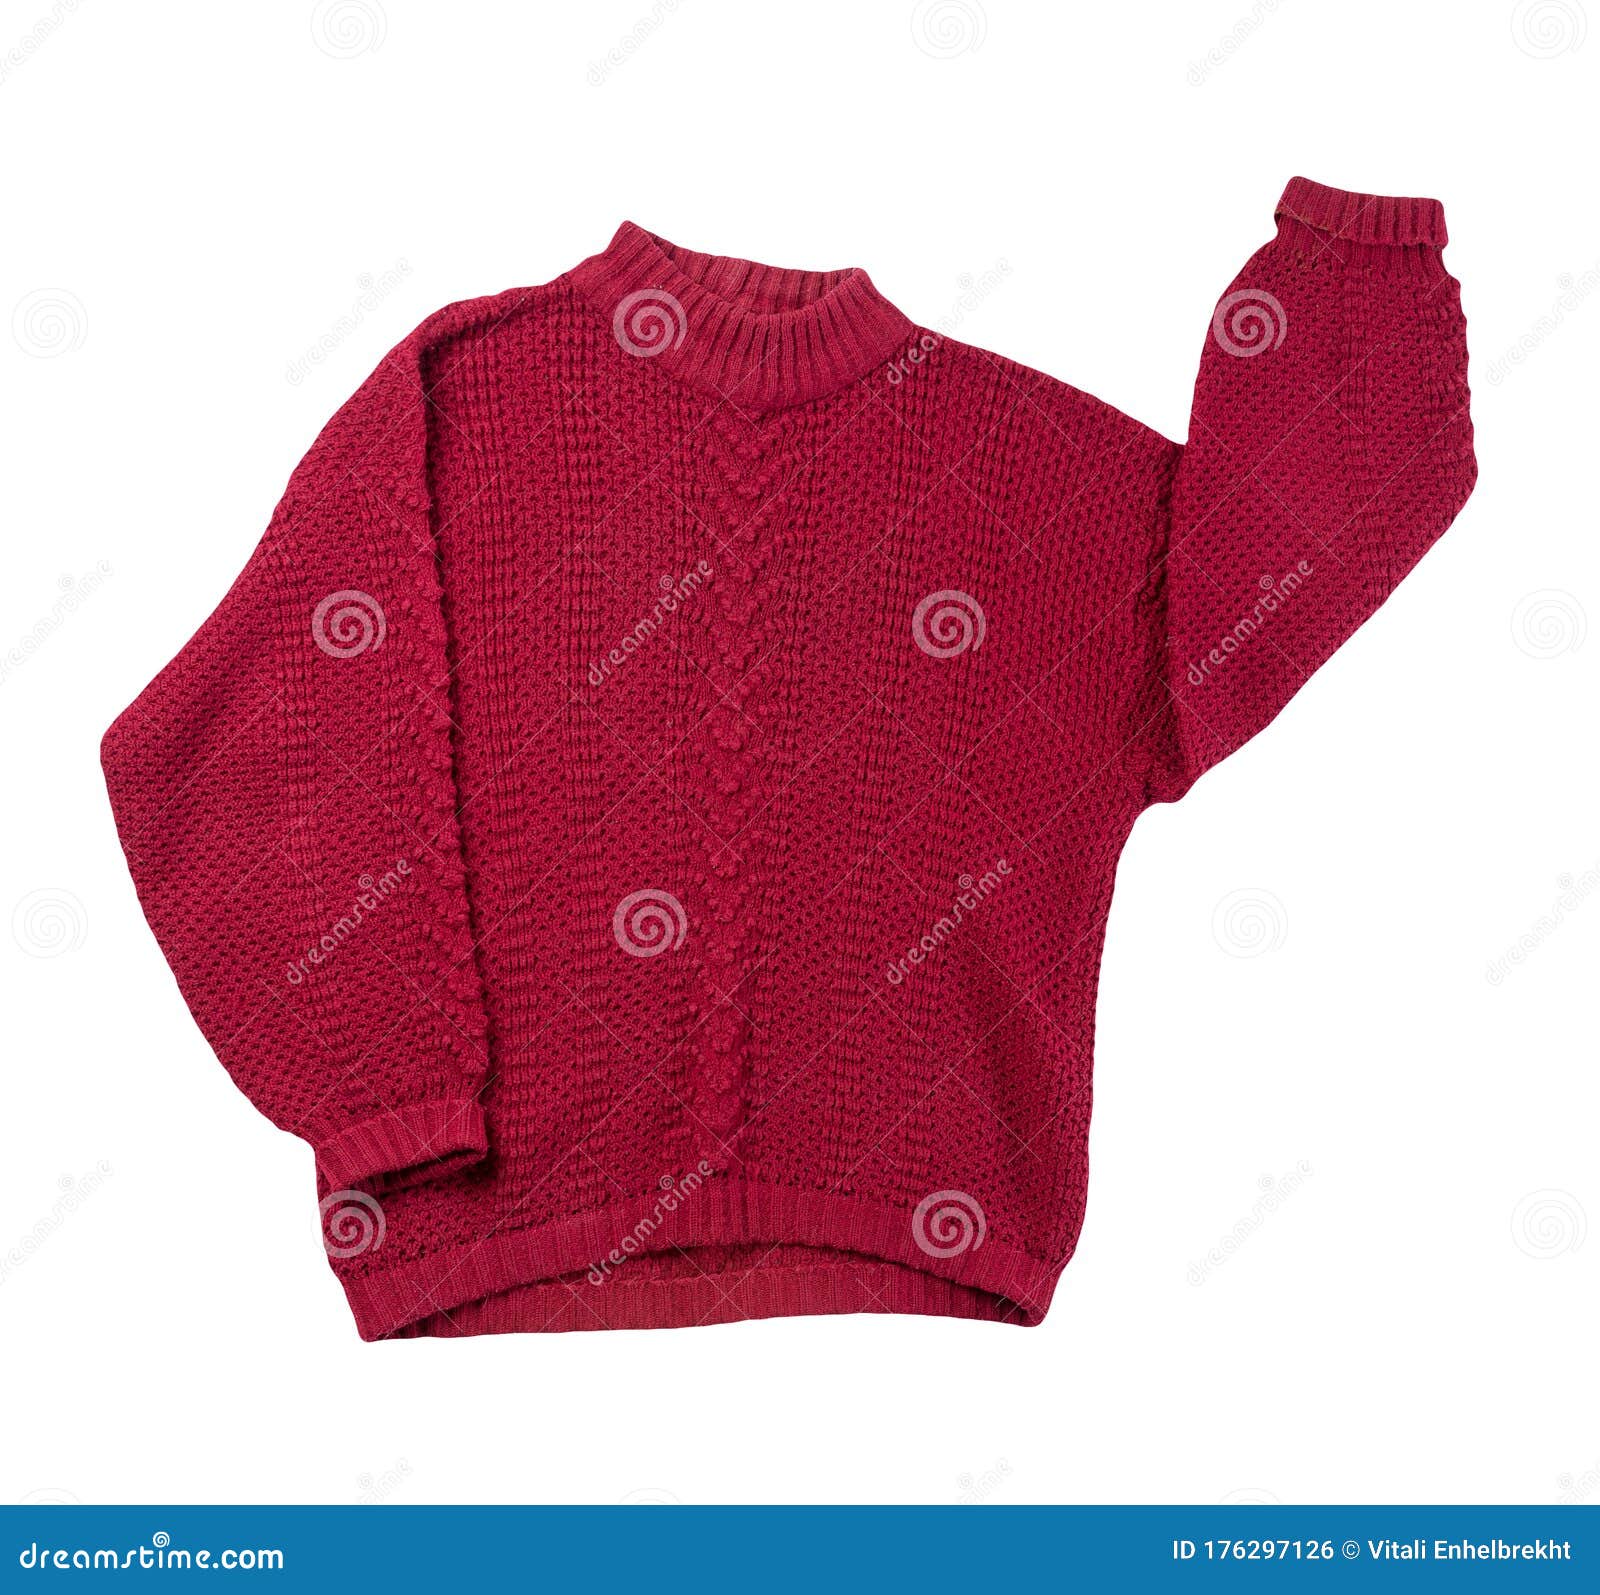 Female Knitted Sweater Isolated on White Background Stock Photo - Image ...